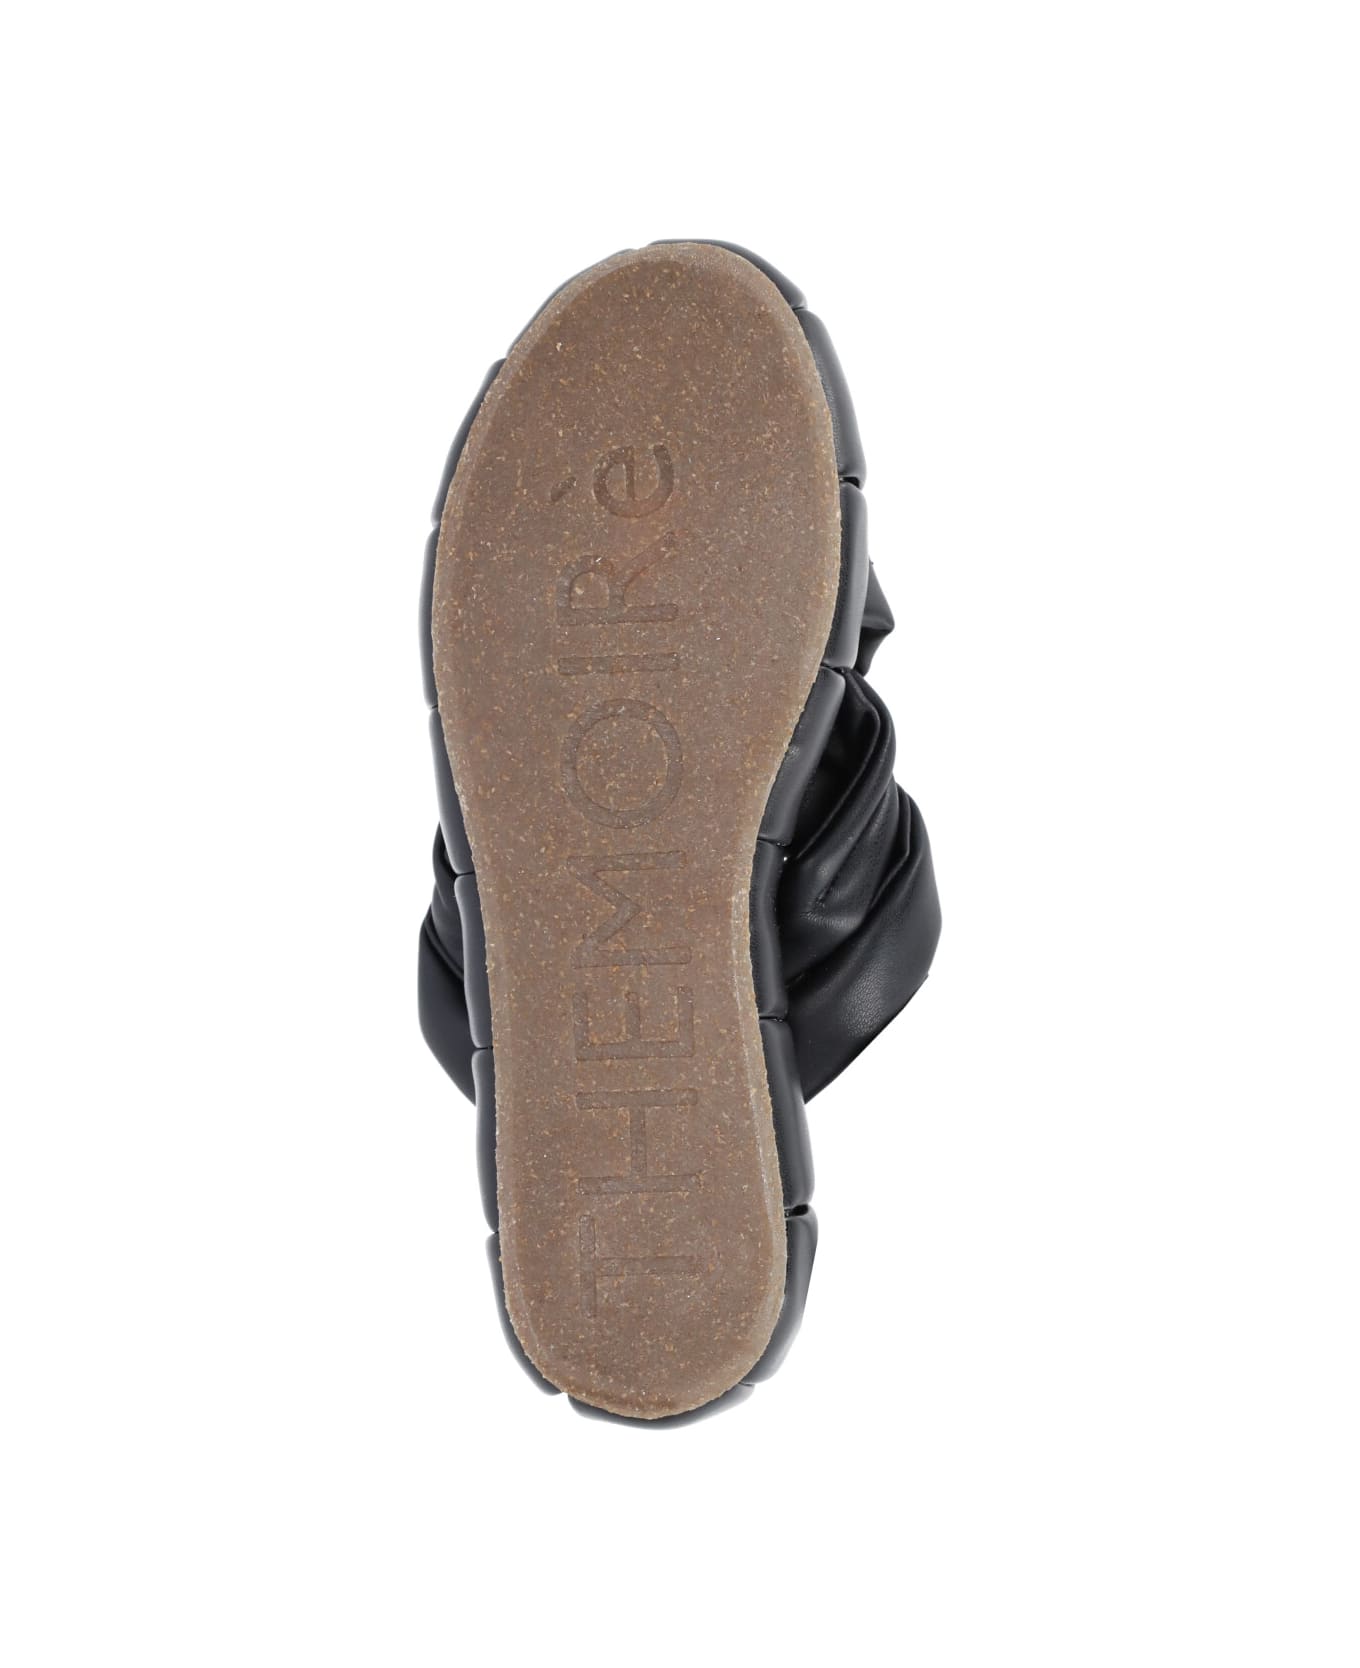 THEMOIRè Acquaria Platform Sandals - Black